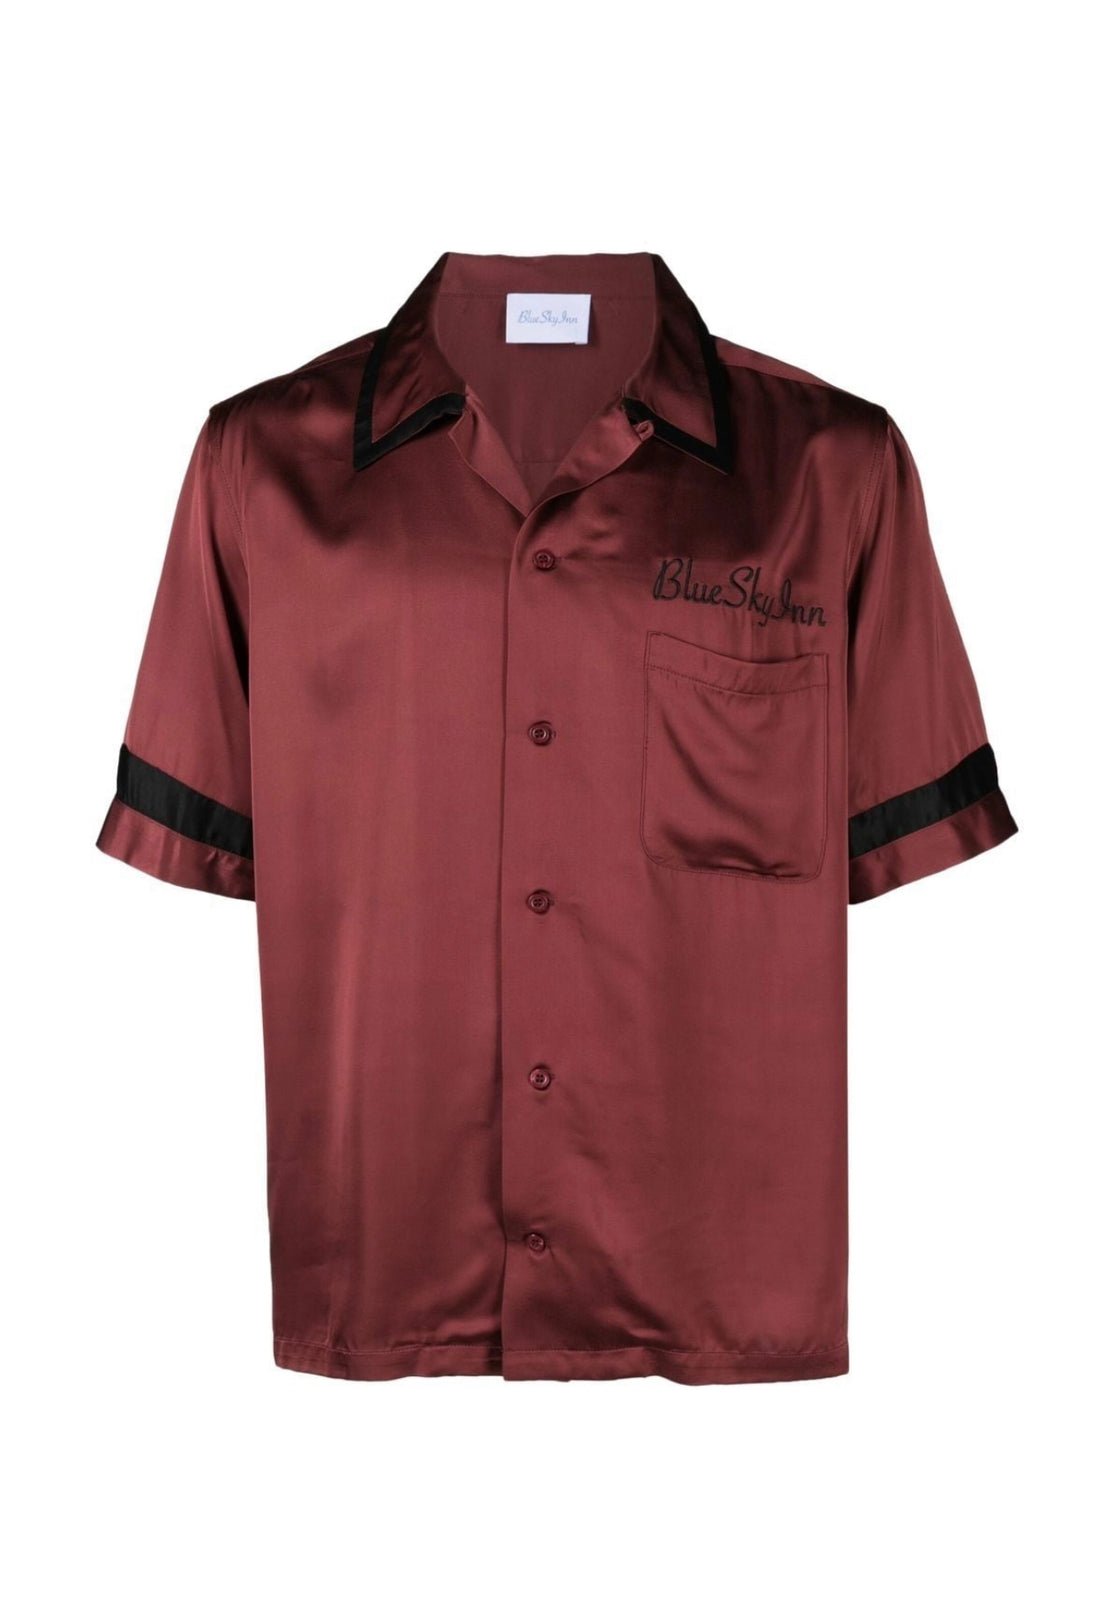 Blue Sky Inn Shirt Waiter Bordeaux - AL Capone PremiumClothingShirts964-20